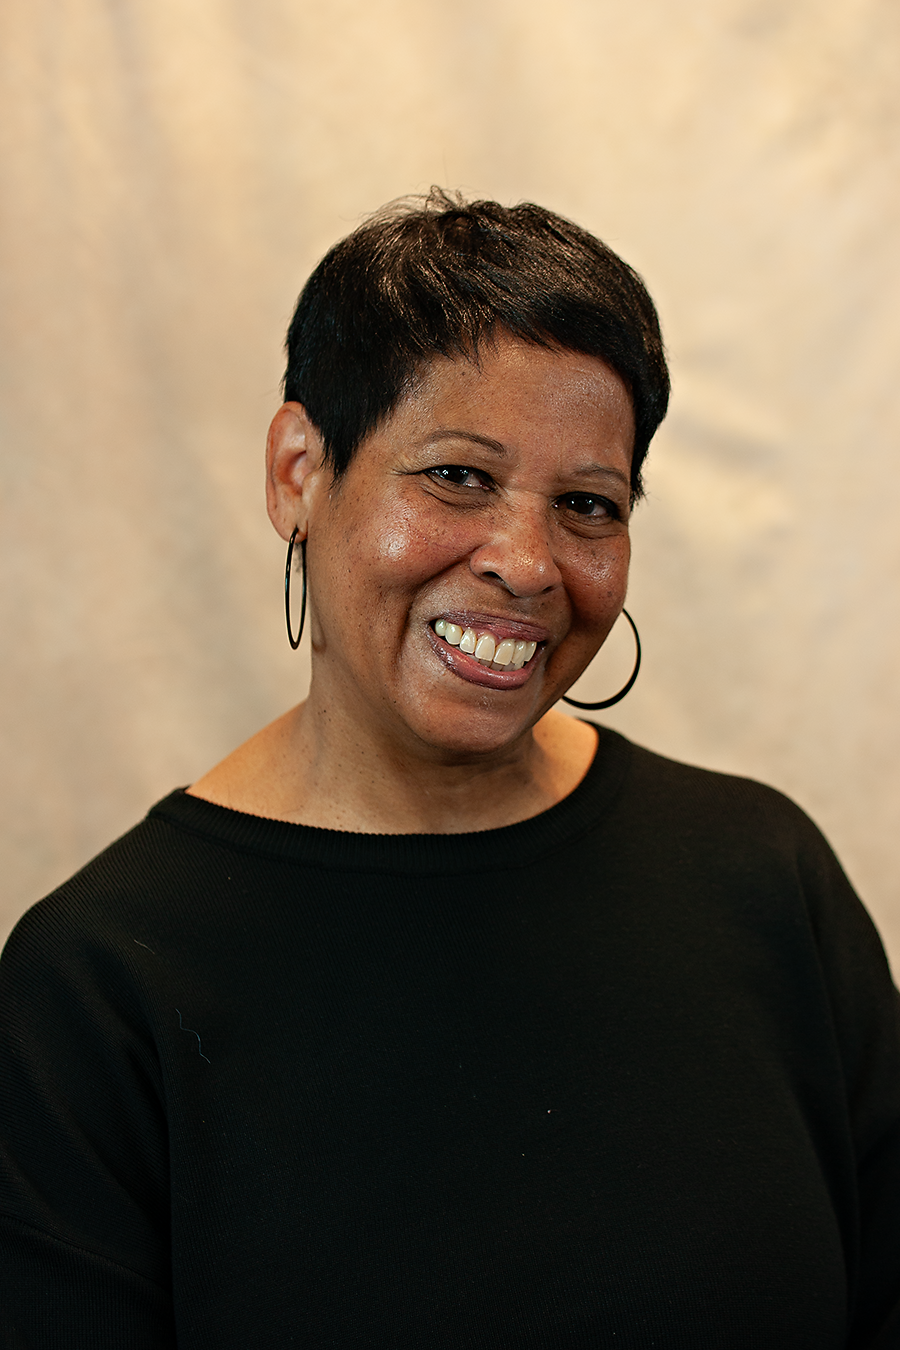 Smiling, professional black woman wearing a black top and hoop earrings.